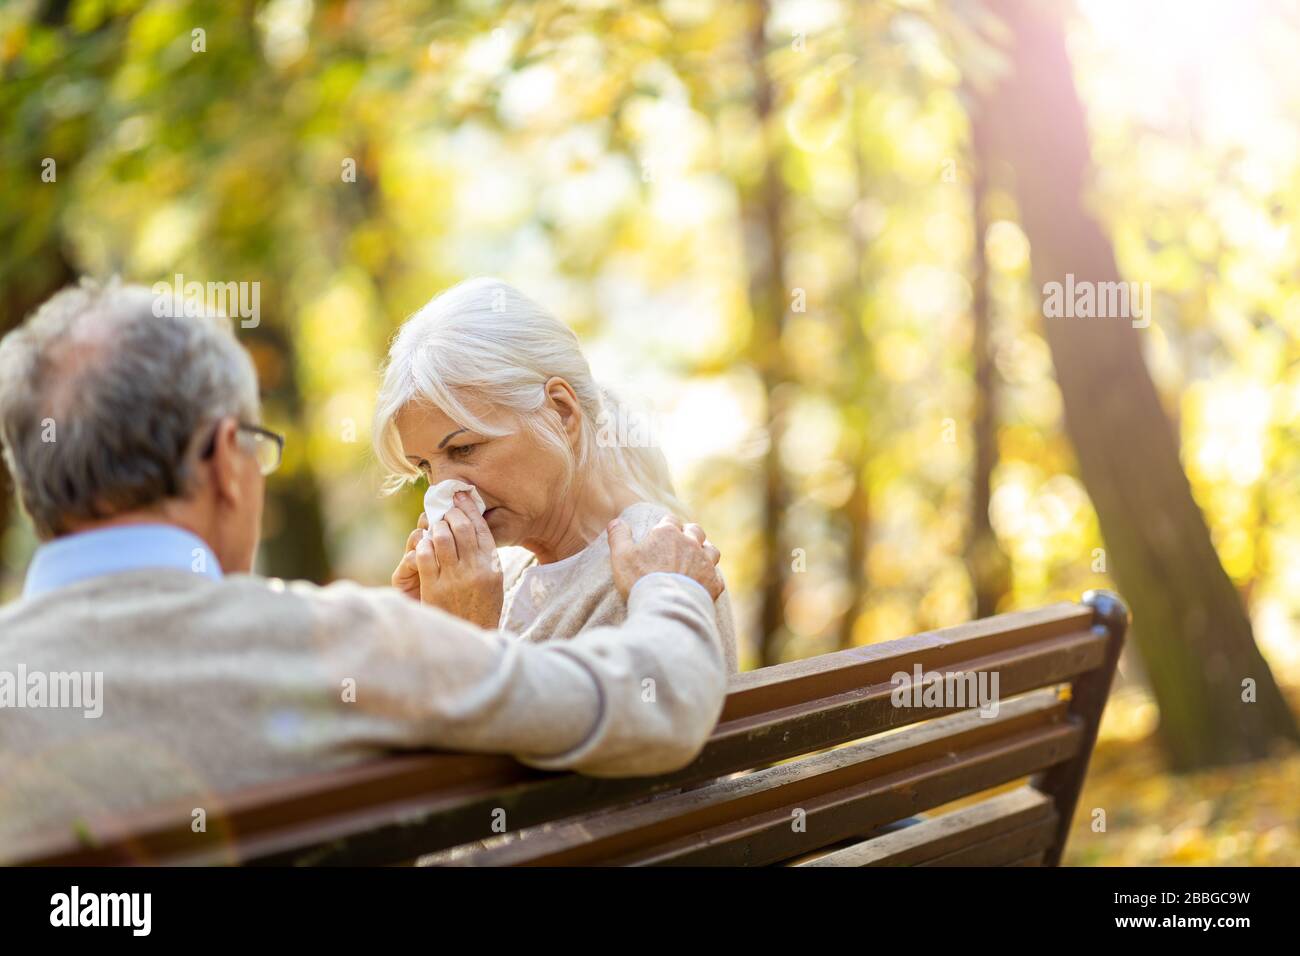 Depressed senior woman consoled by elderly man Stock Photo